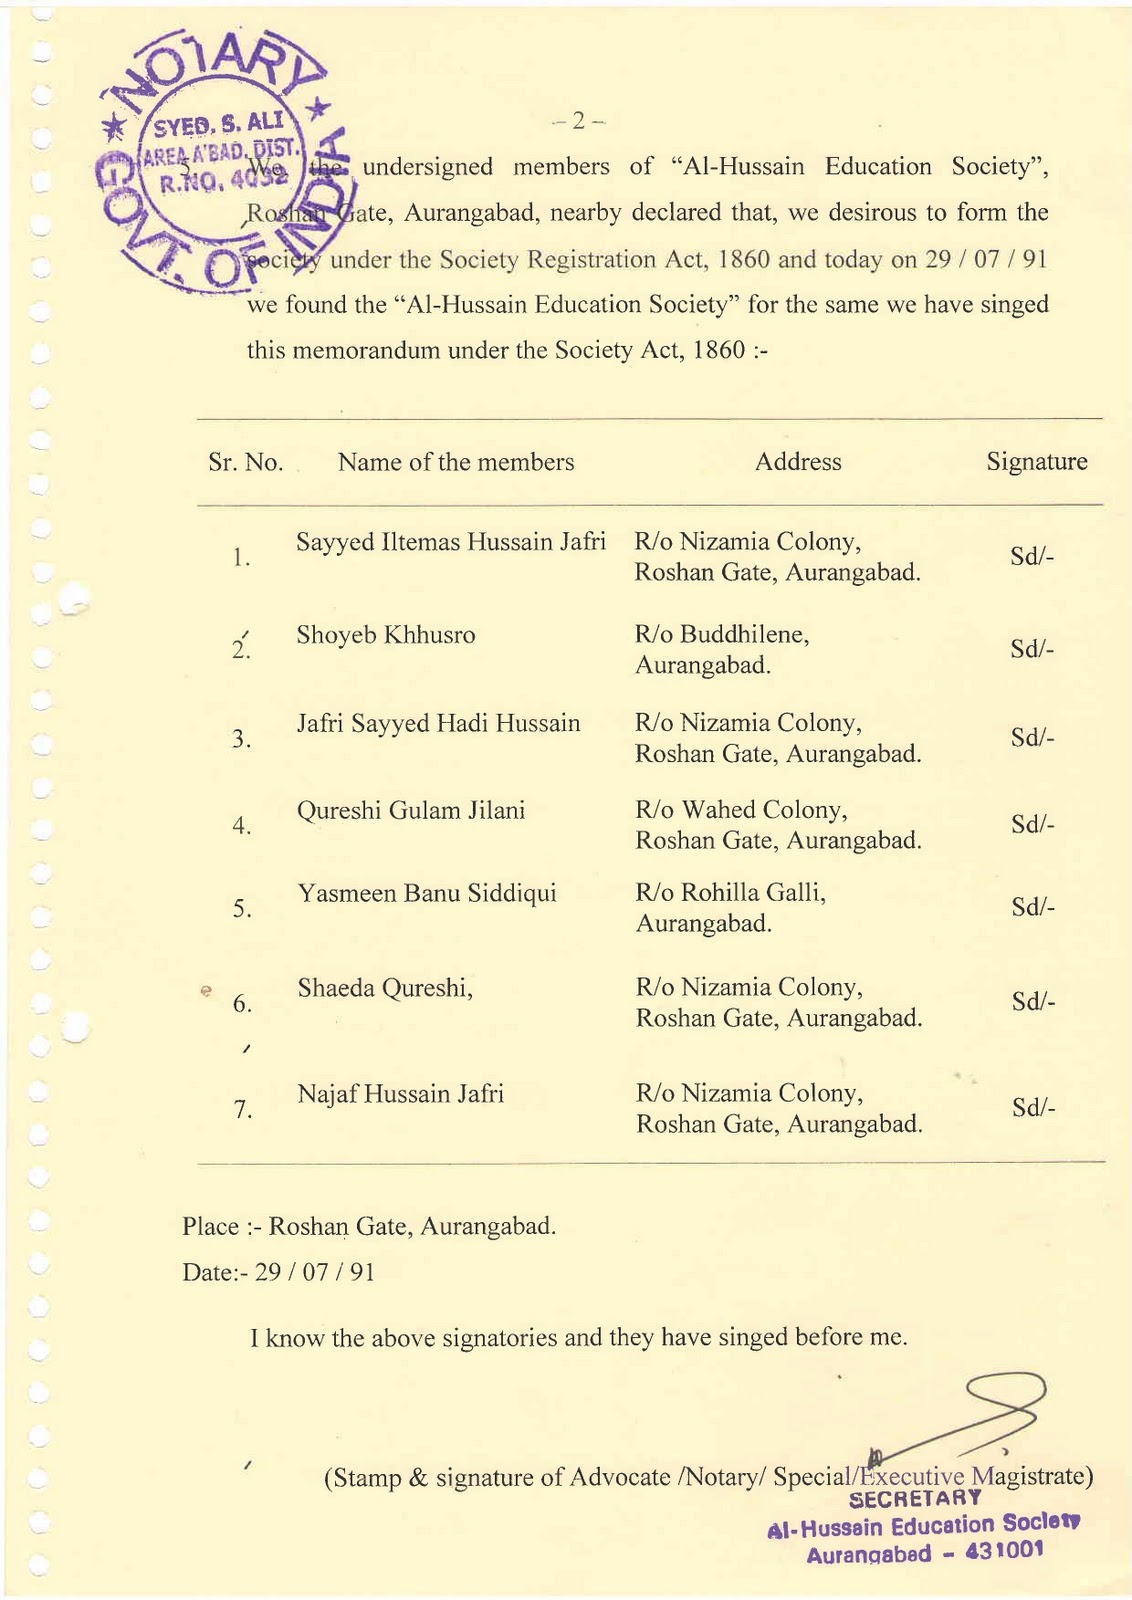 Al-Hussain Education Society-Aurangabad: Memorandum of Association